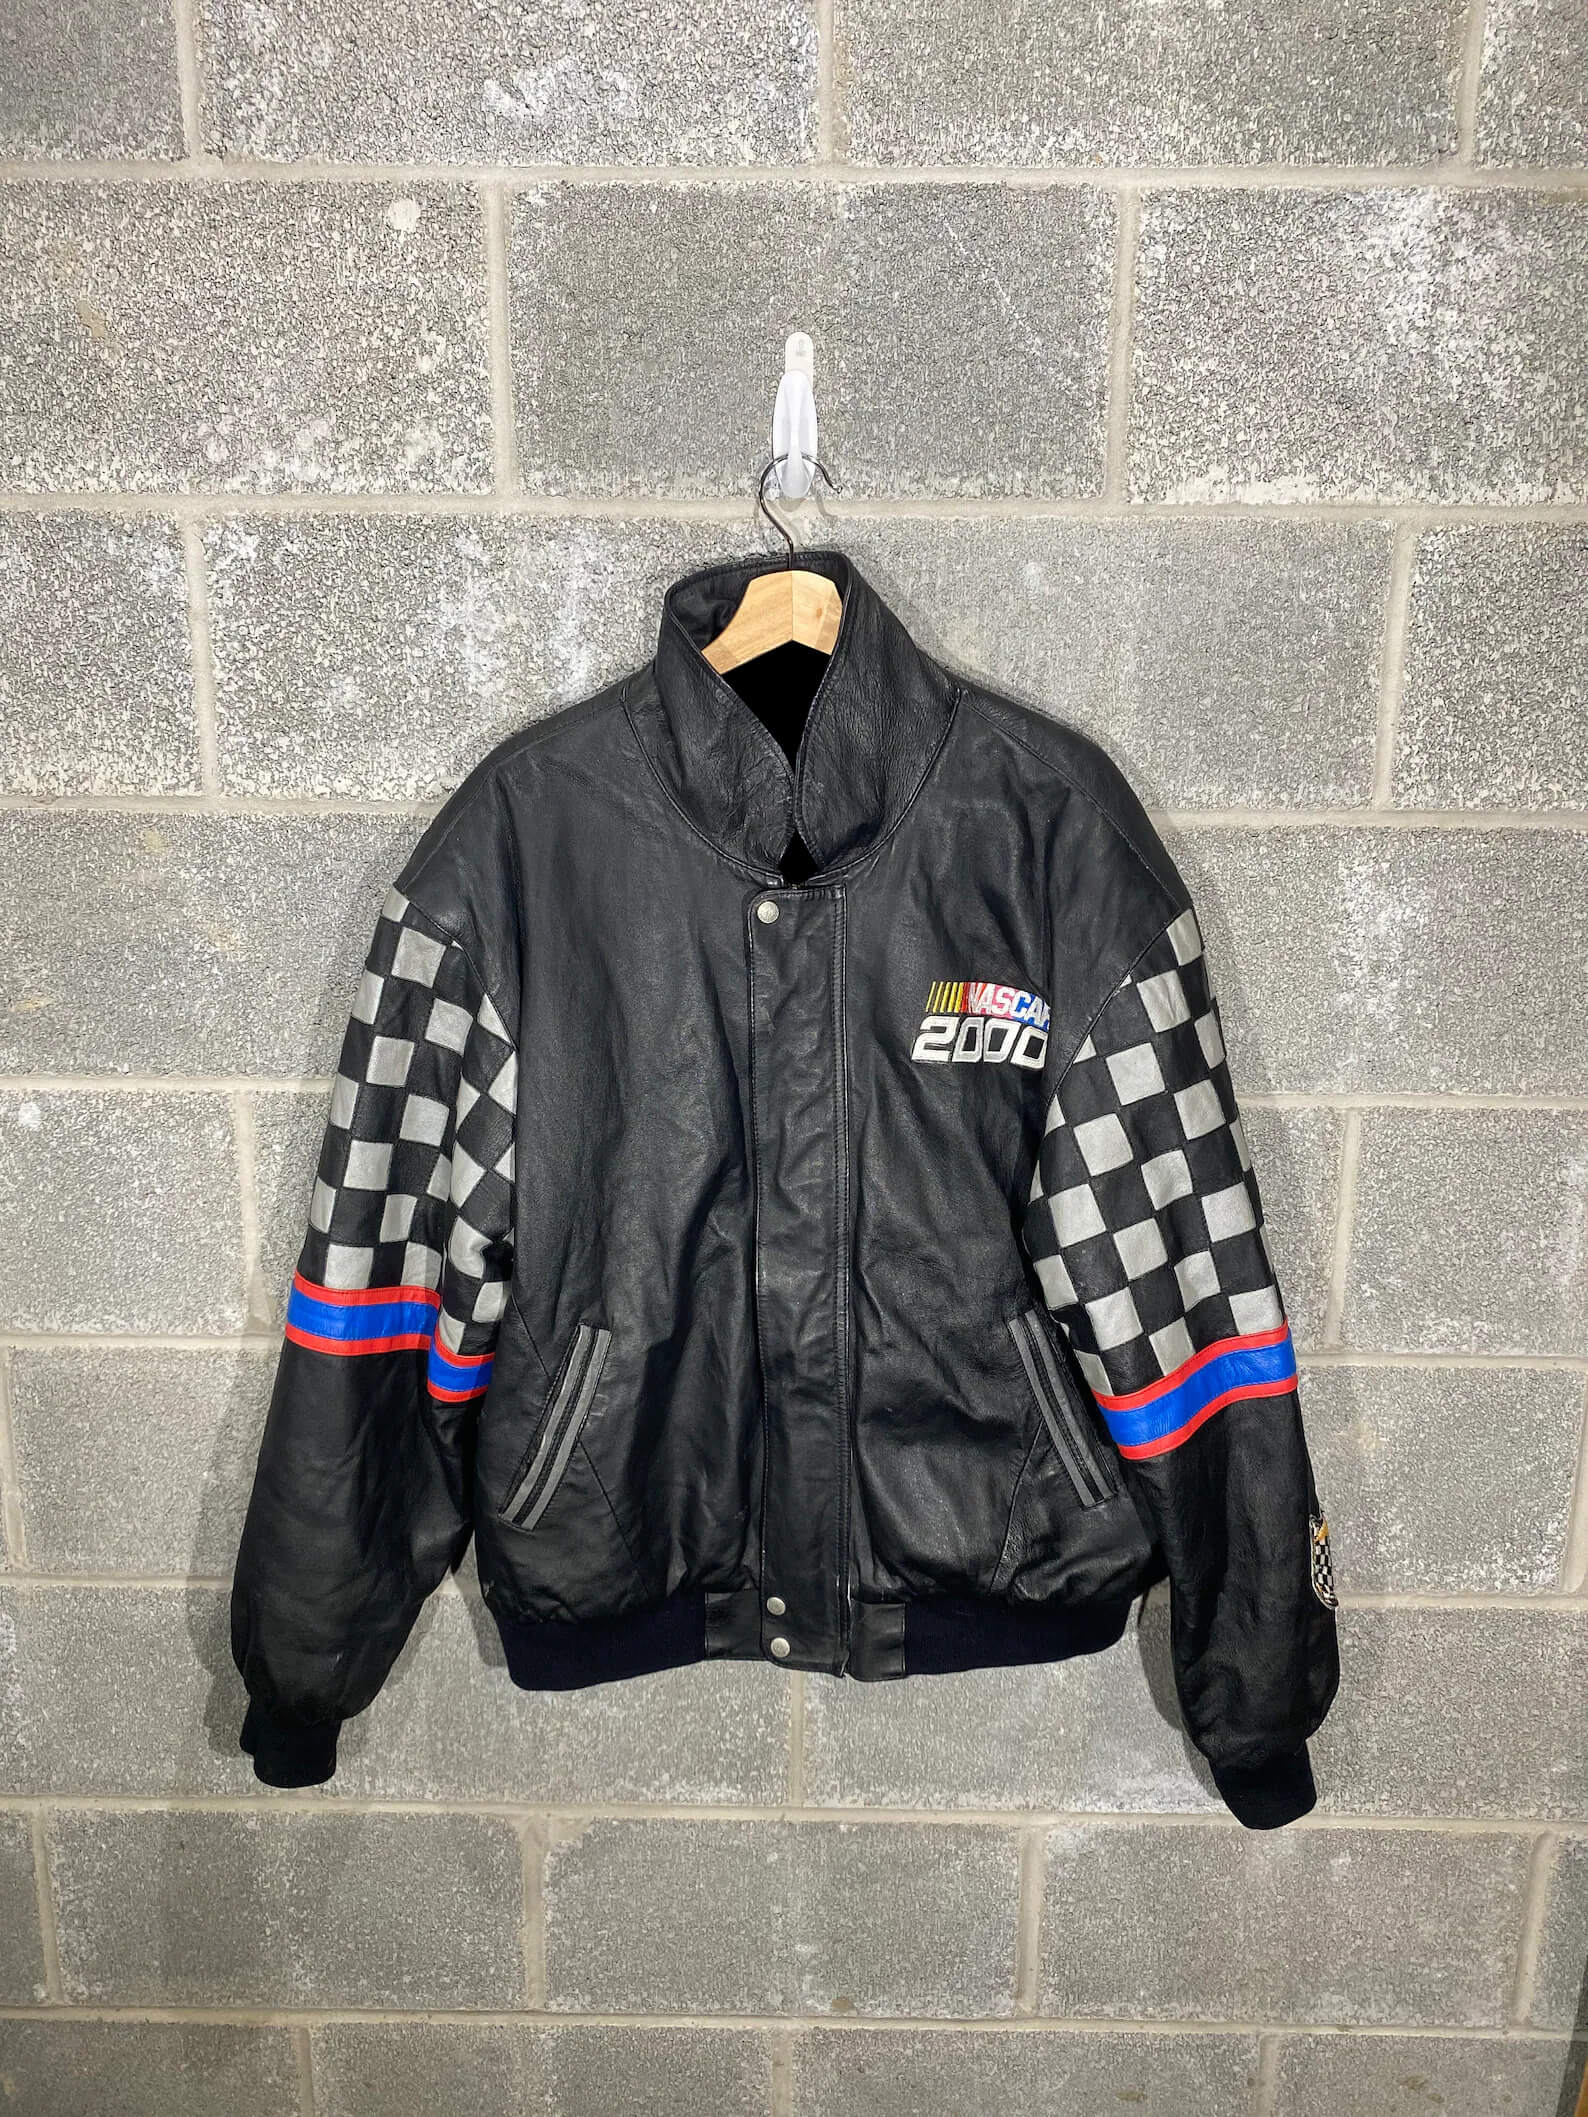 Vintage NASCAR 2000 Black Jeff Hamilton Leather Jacket